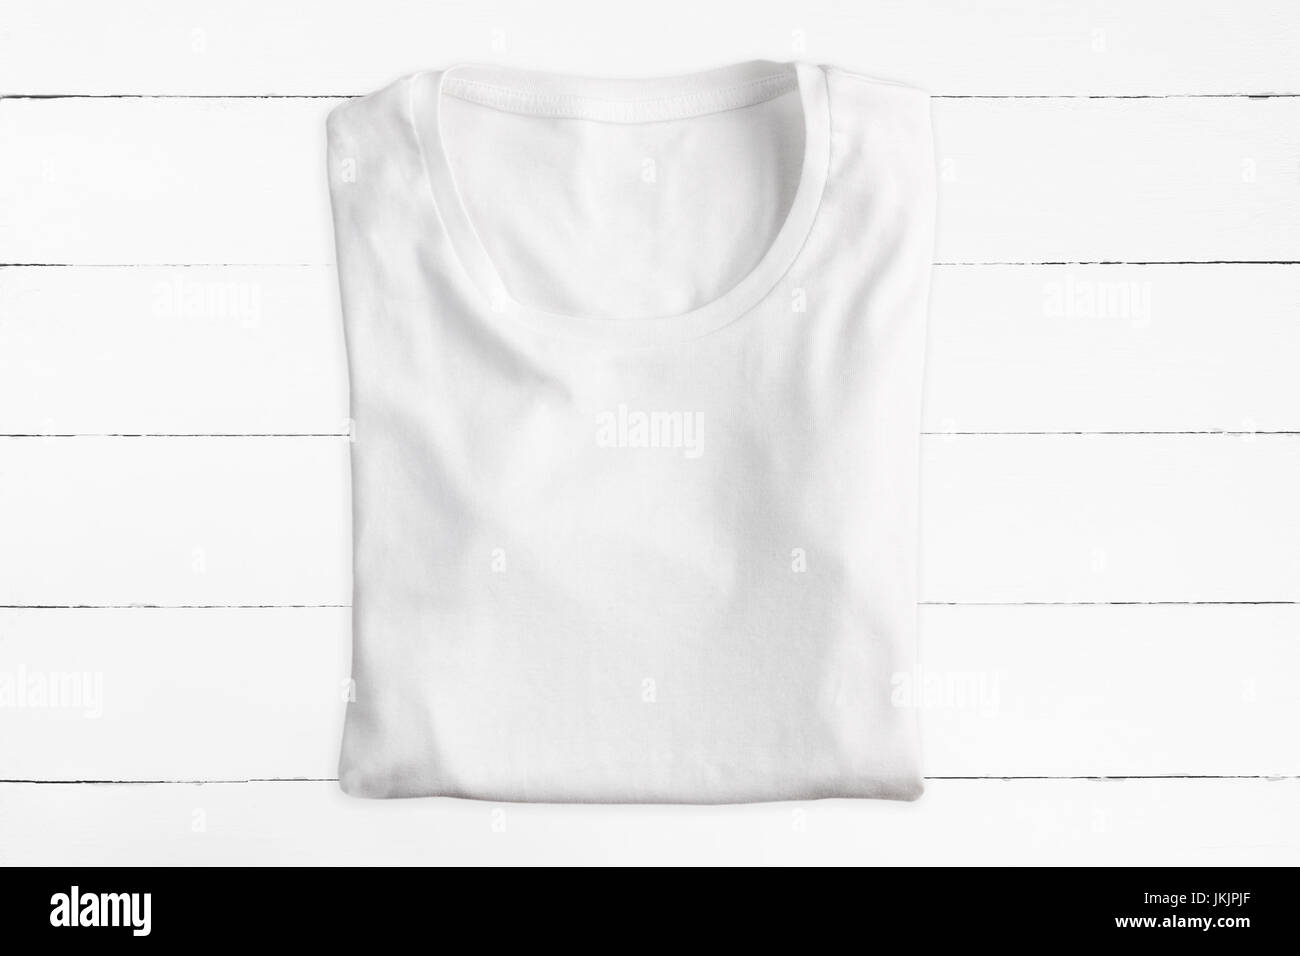 Blank folded t-shirt on white wooden background Stock Photo